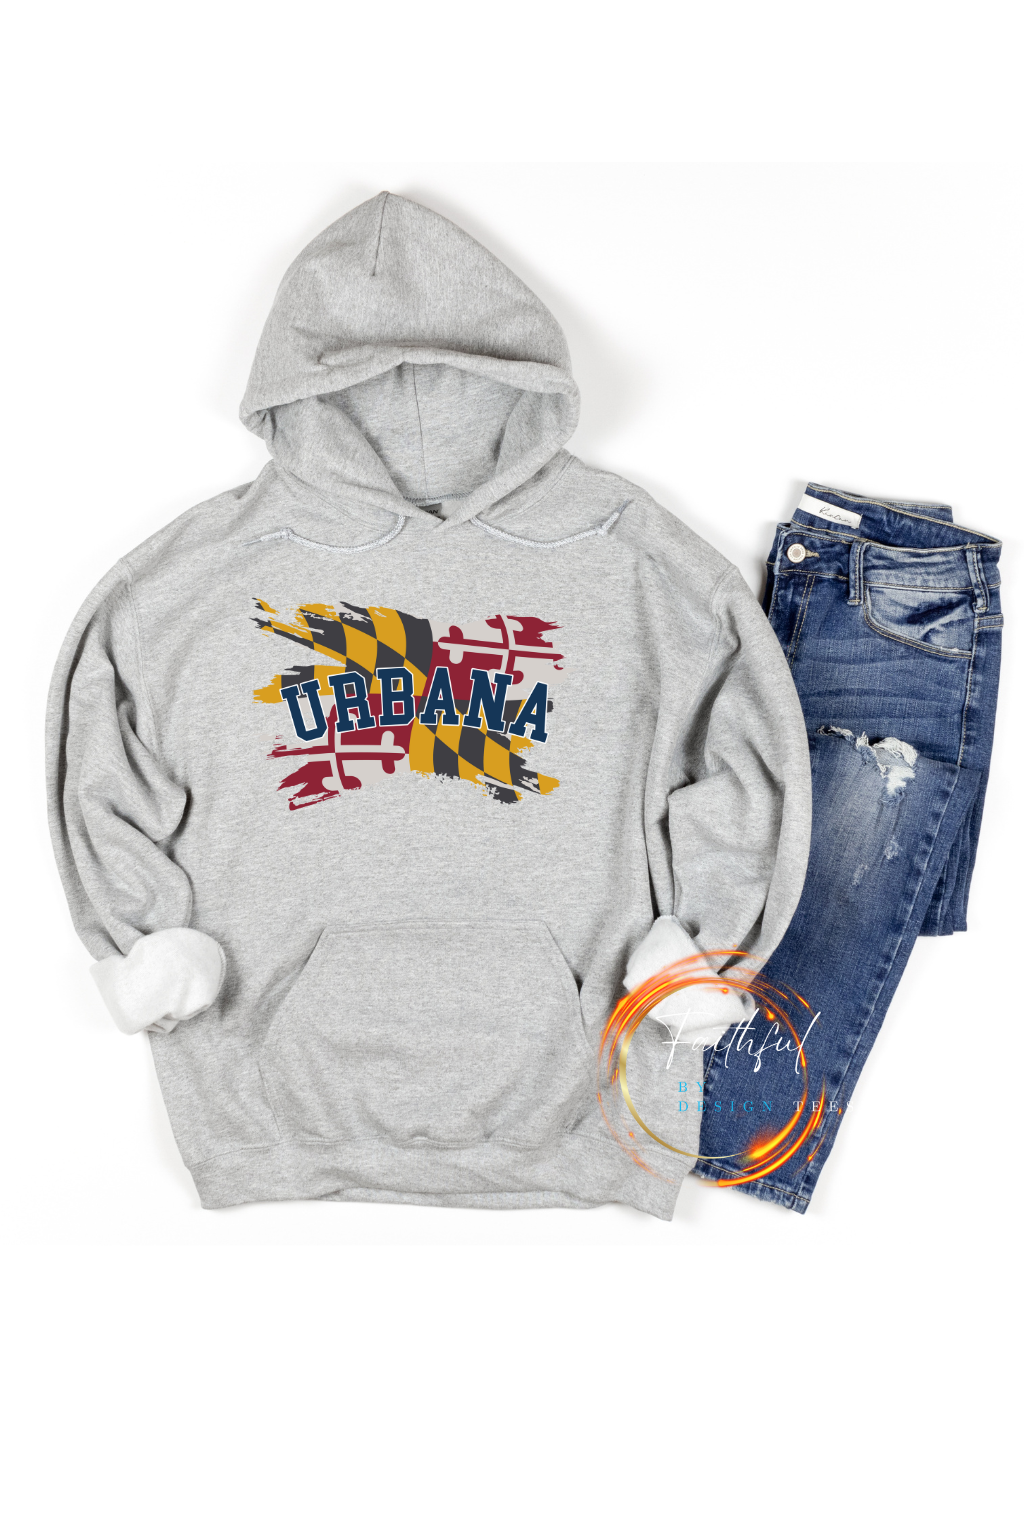 Maryland Urbana Hoodie & Crew Sweatshirt (Adult & Youth)